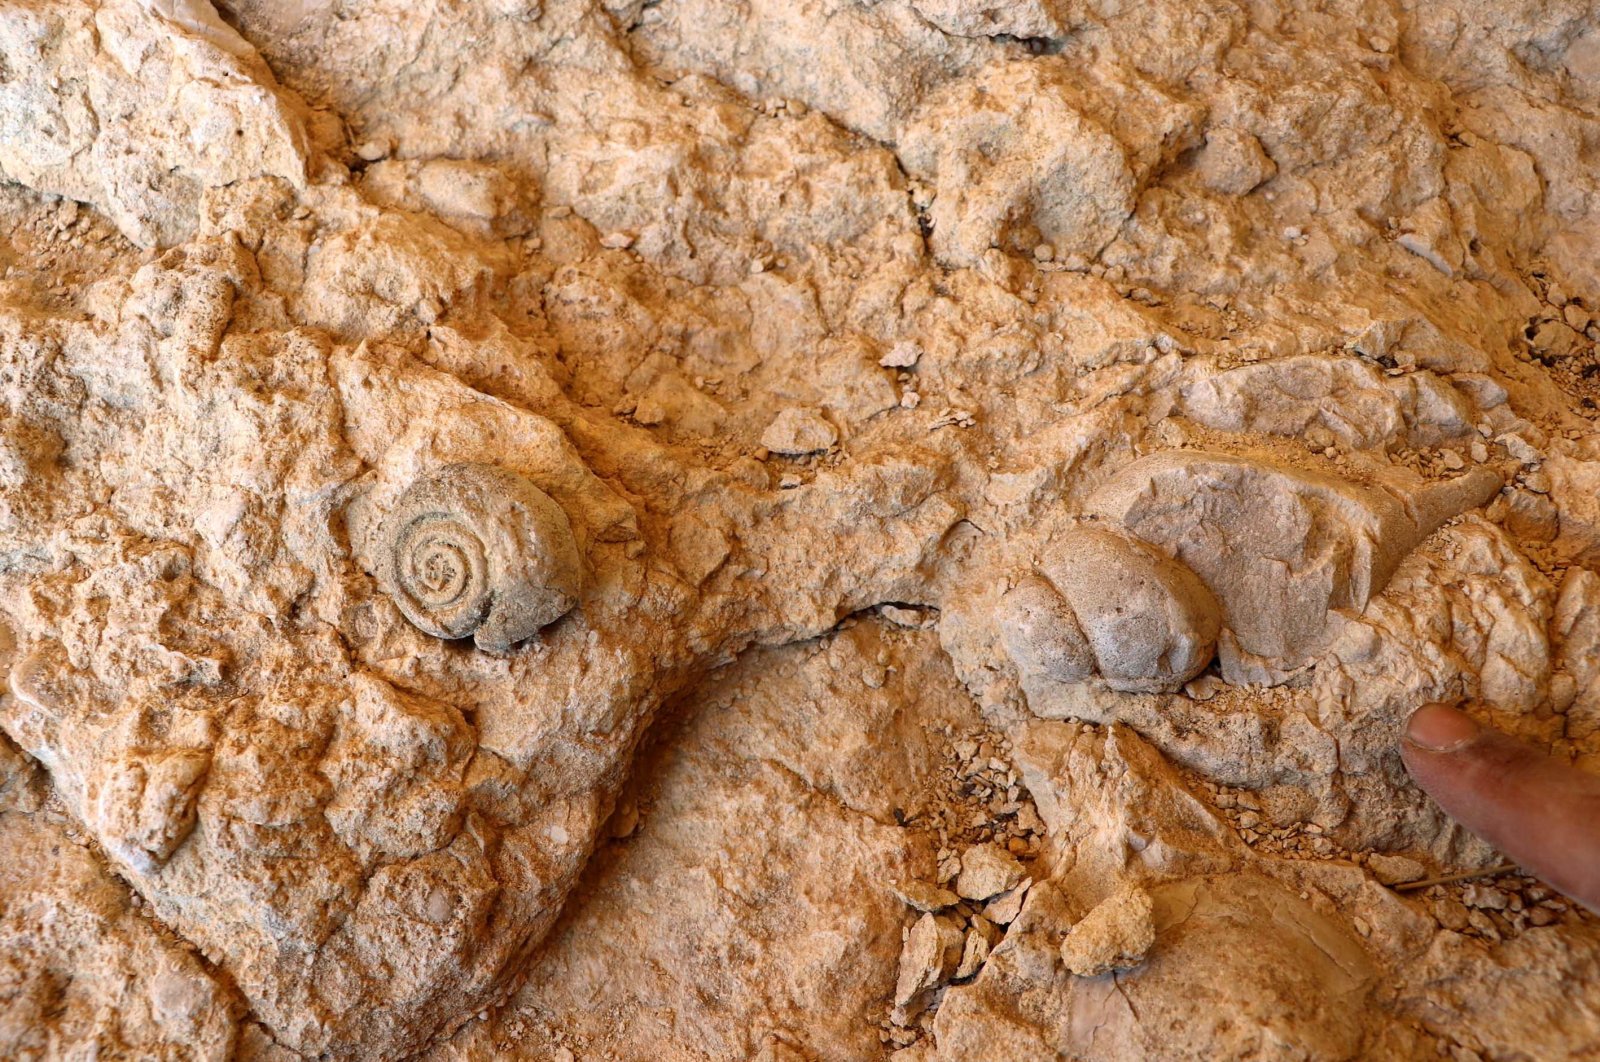 Marine fossil remains sit on a rocky terrain in Elazığ, Turkey, April 29, 2021. (AA Photo)